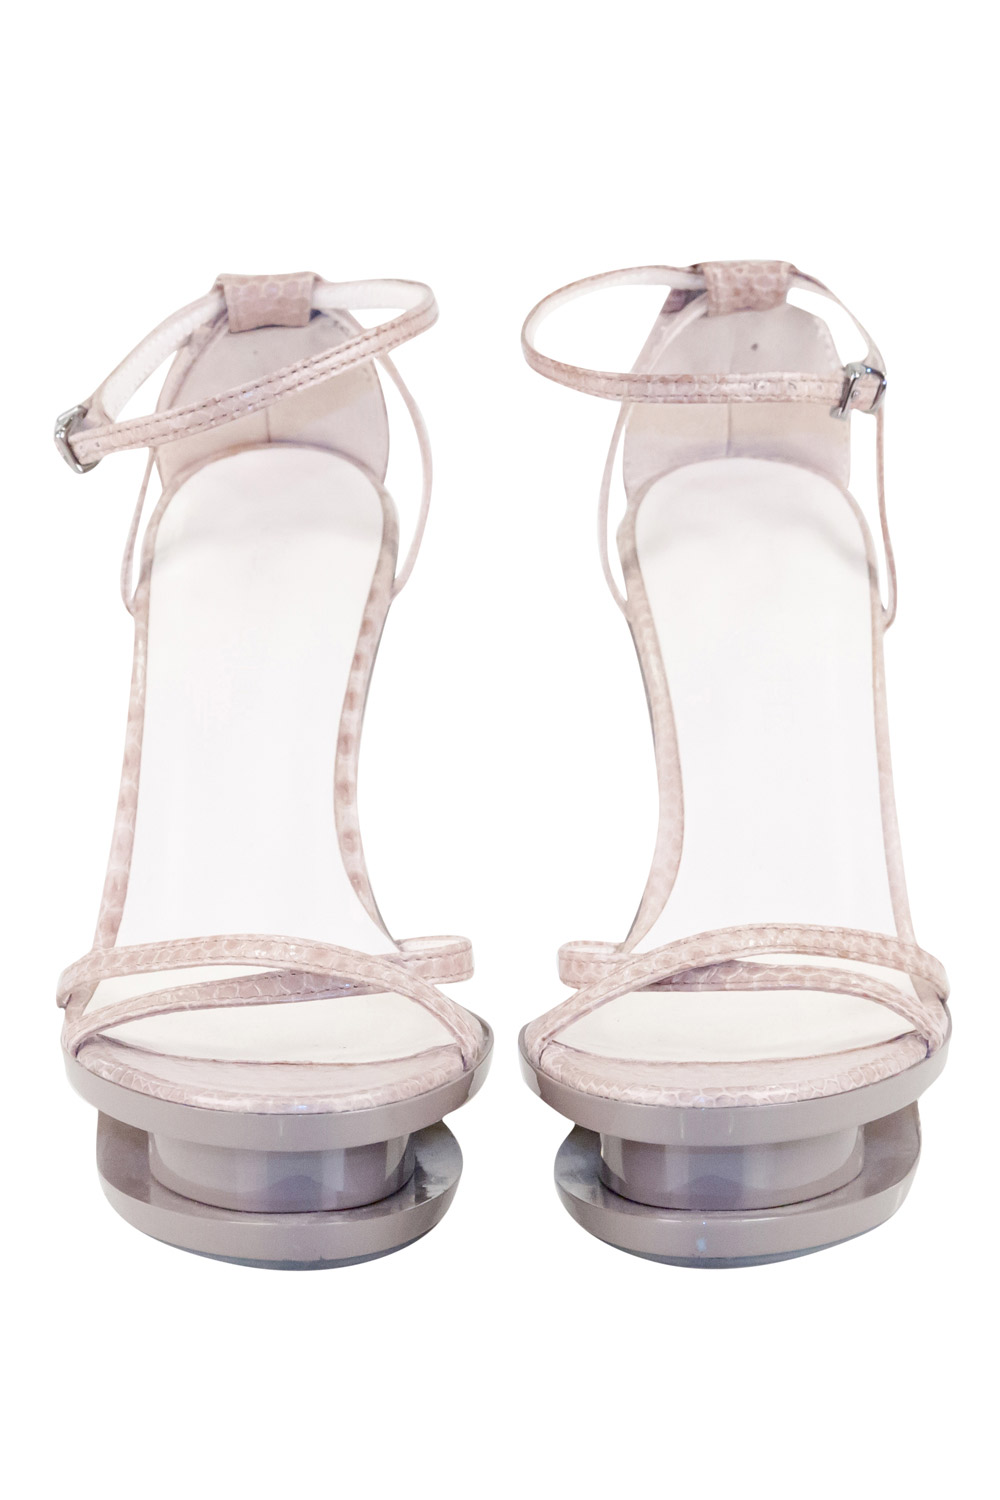 Pre-owned Jil Sander Grey Leather Ankle Strap Sandals Size 35